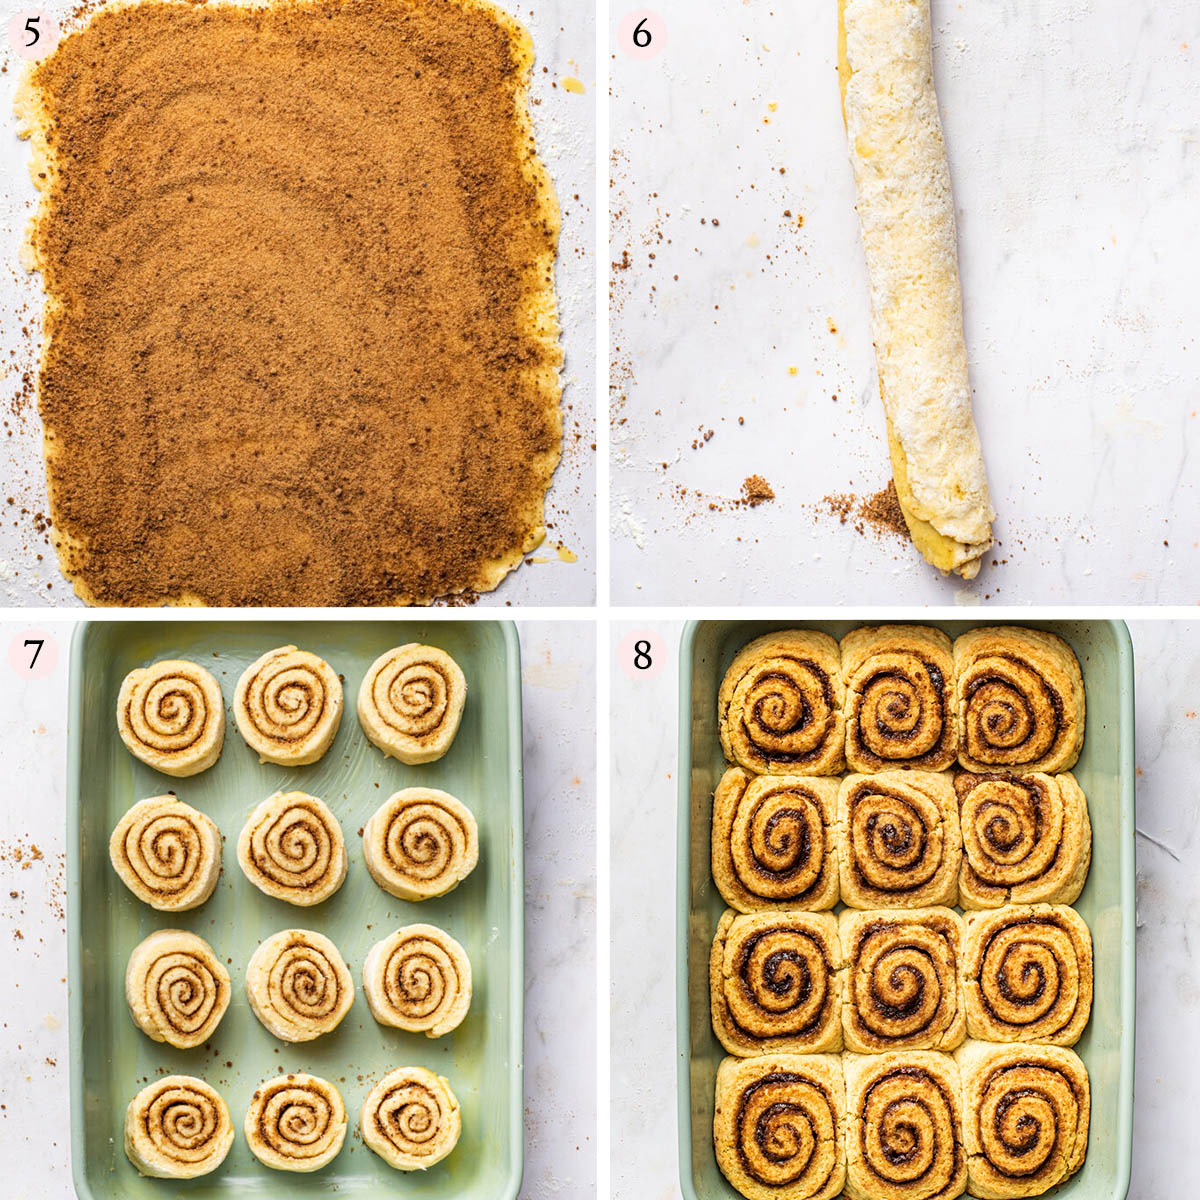 Yeast free cinnamon rolls steps 5 to 8.